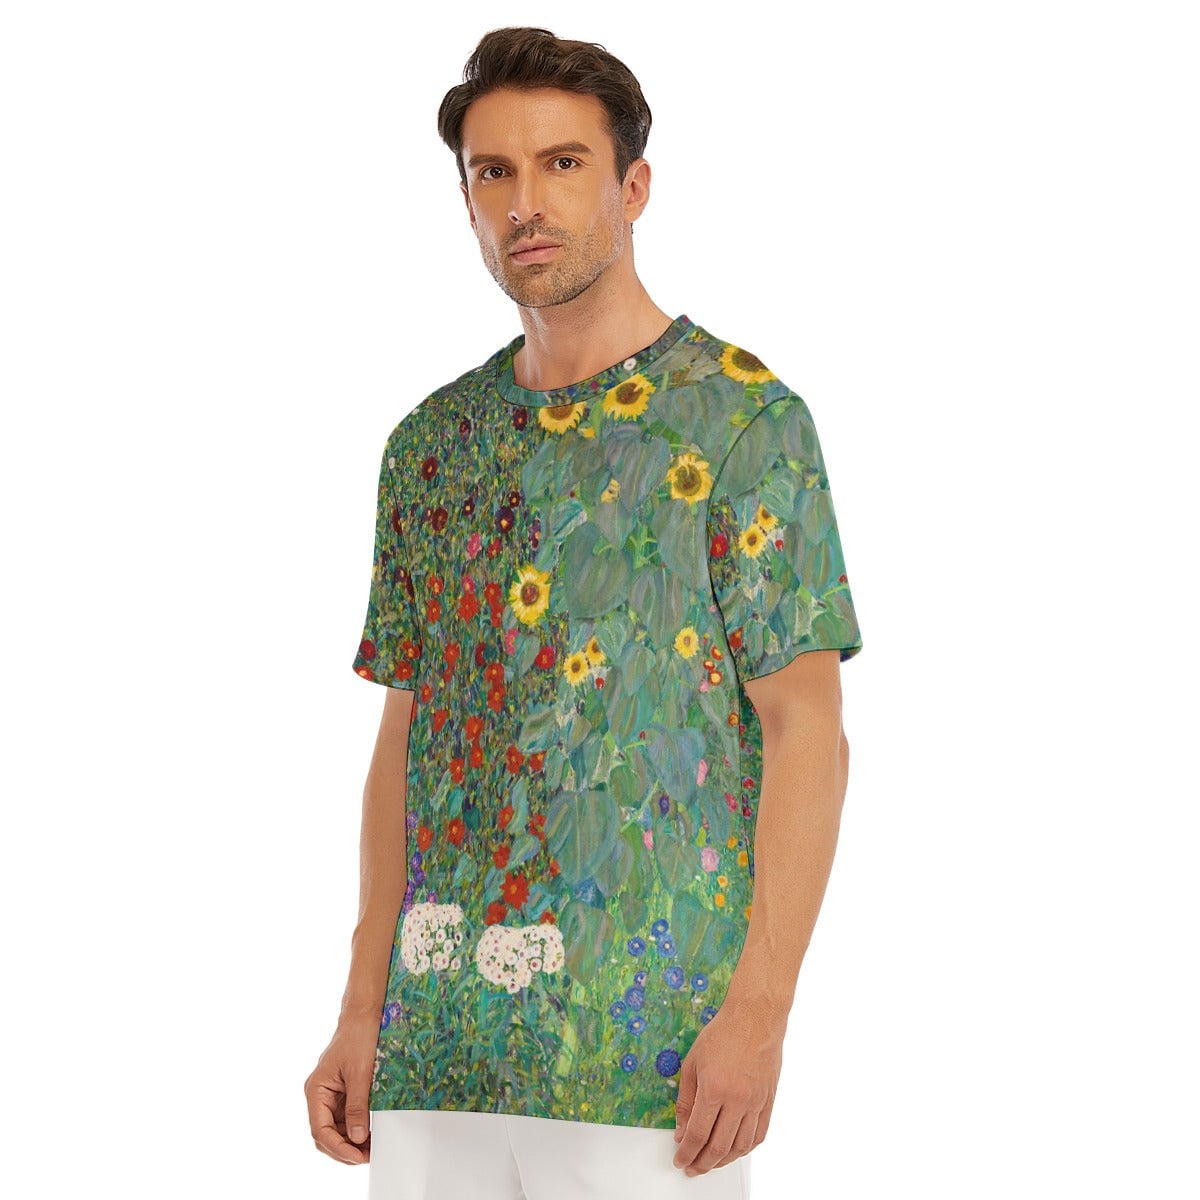 Gustav Klimt’s Farm Garden with Sunflowers T-Shirt